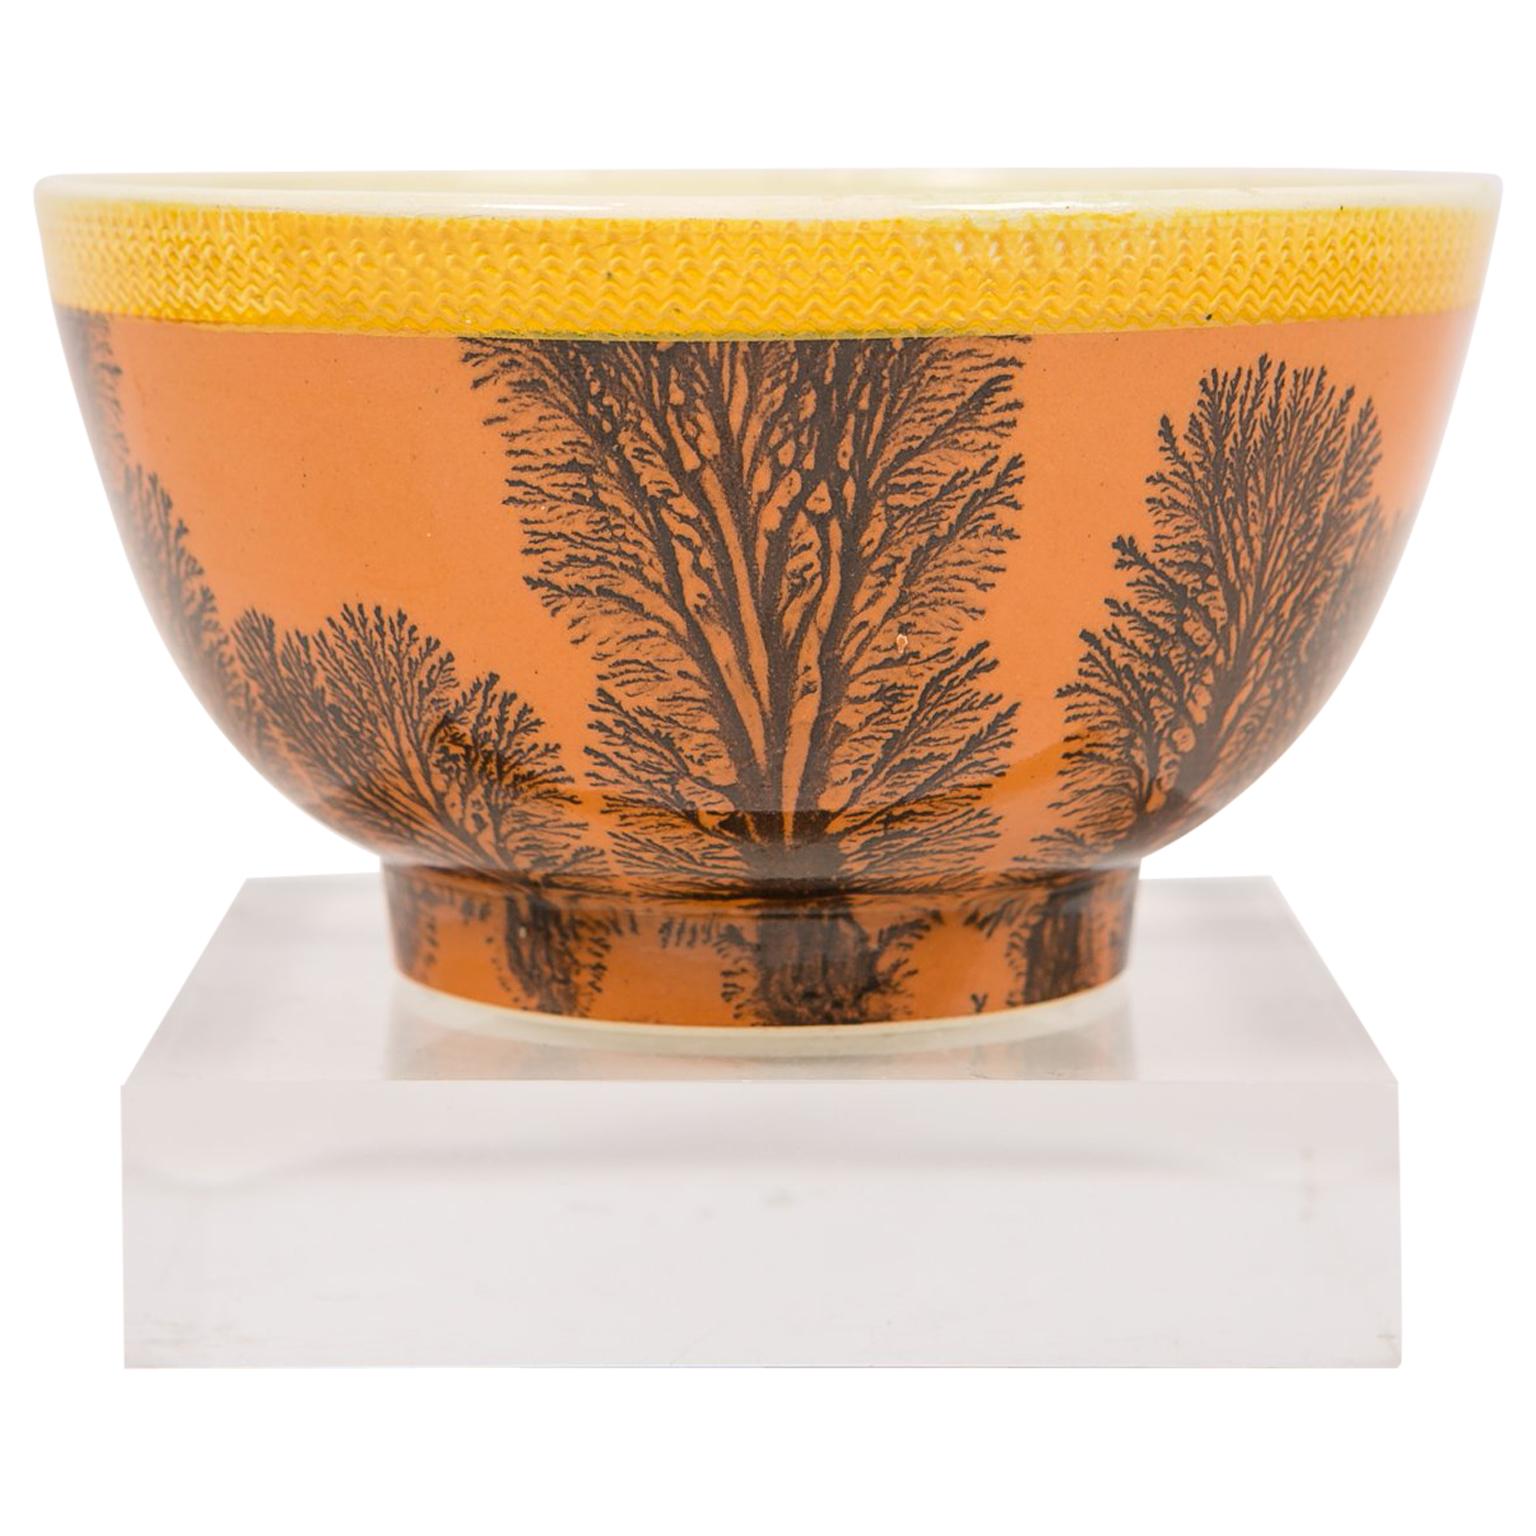 Creamware Mochaware Bowl Decorated with Trees circa 1800